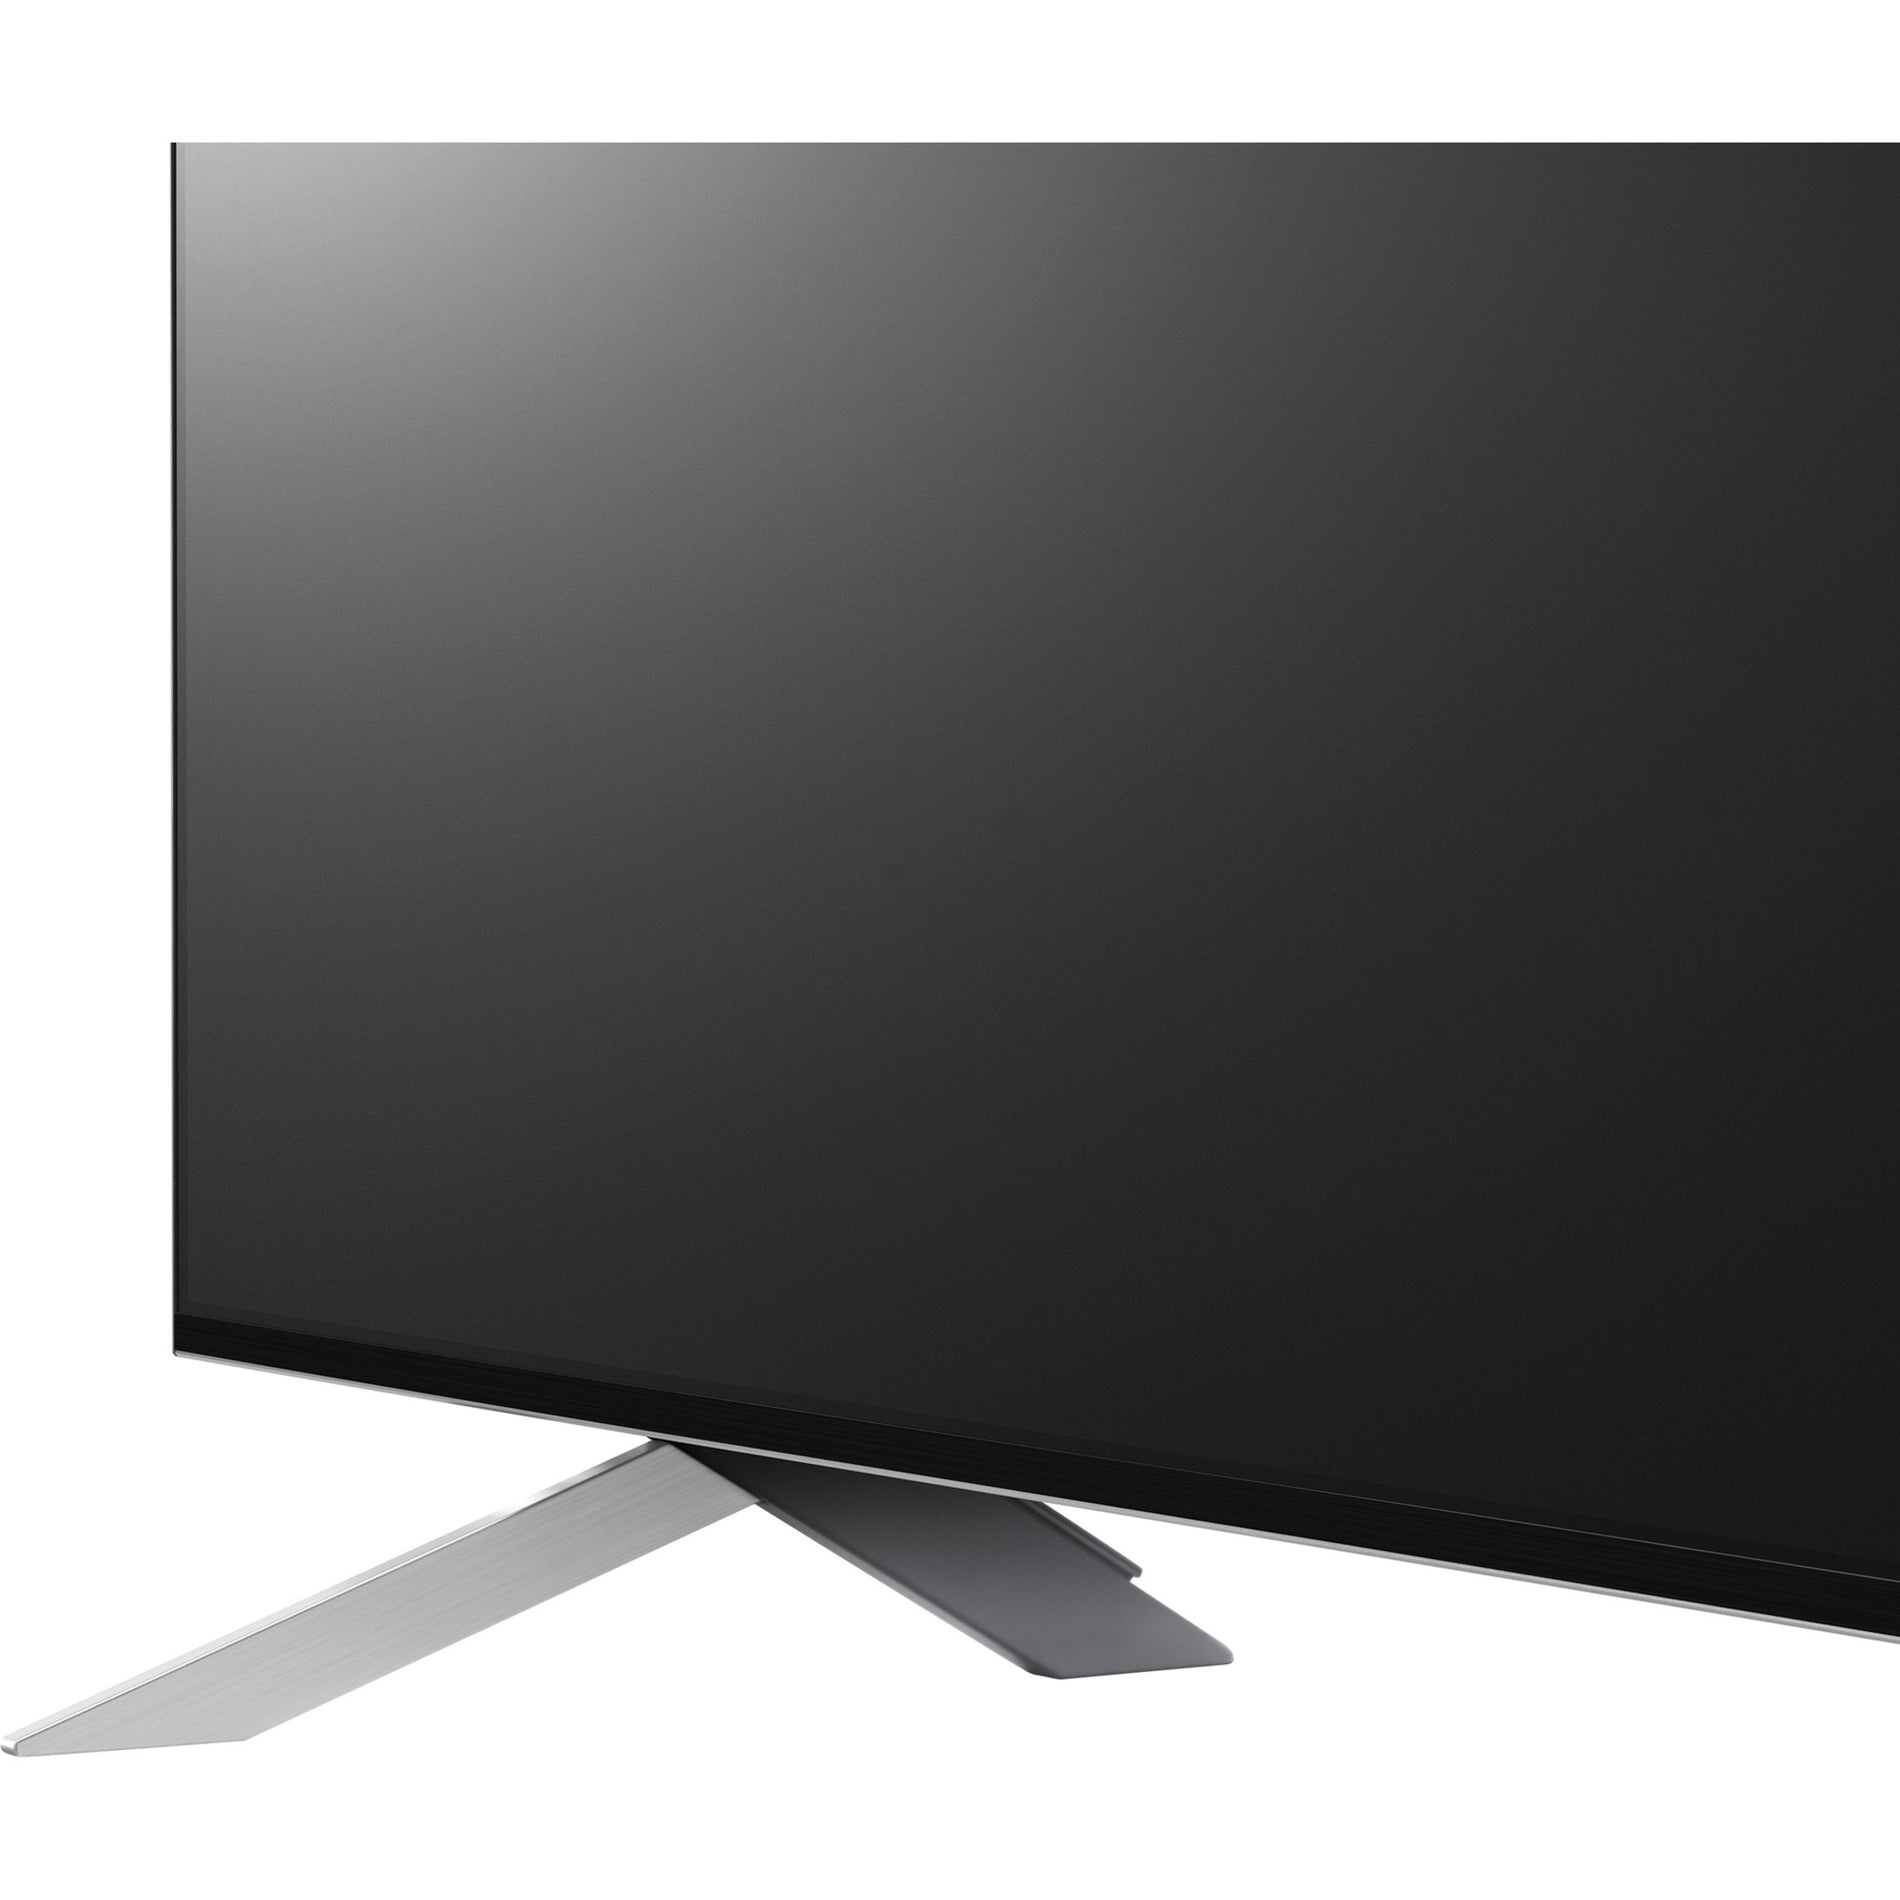 LG 65QNED99UPA 64.5" Smart LED-LCD TV - 8K UHD [Discontinued]